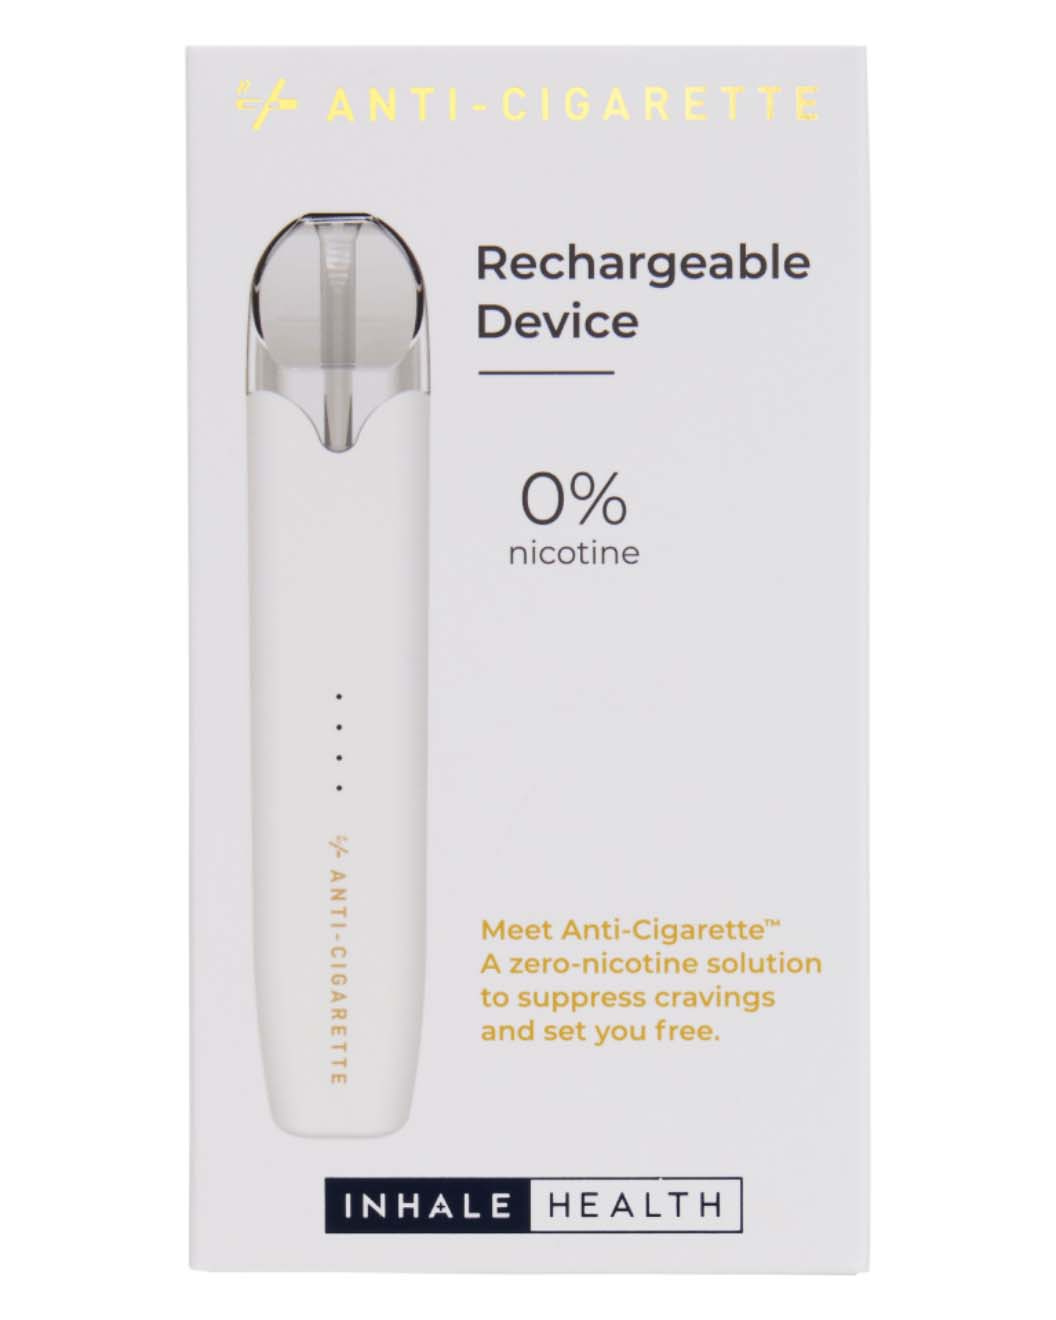 Anti-Cigarette from InhaleHealth